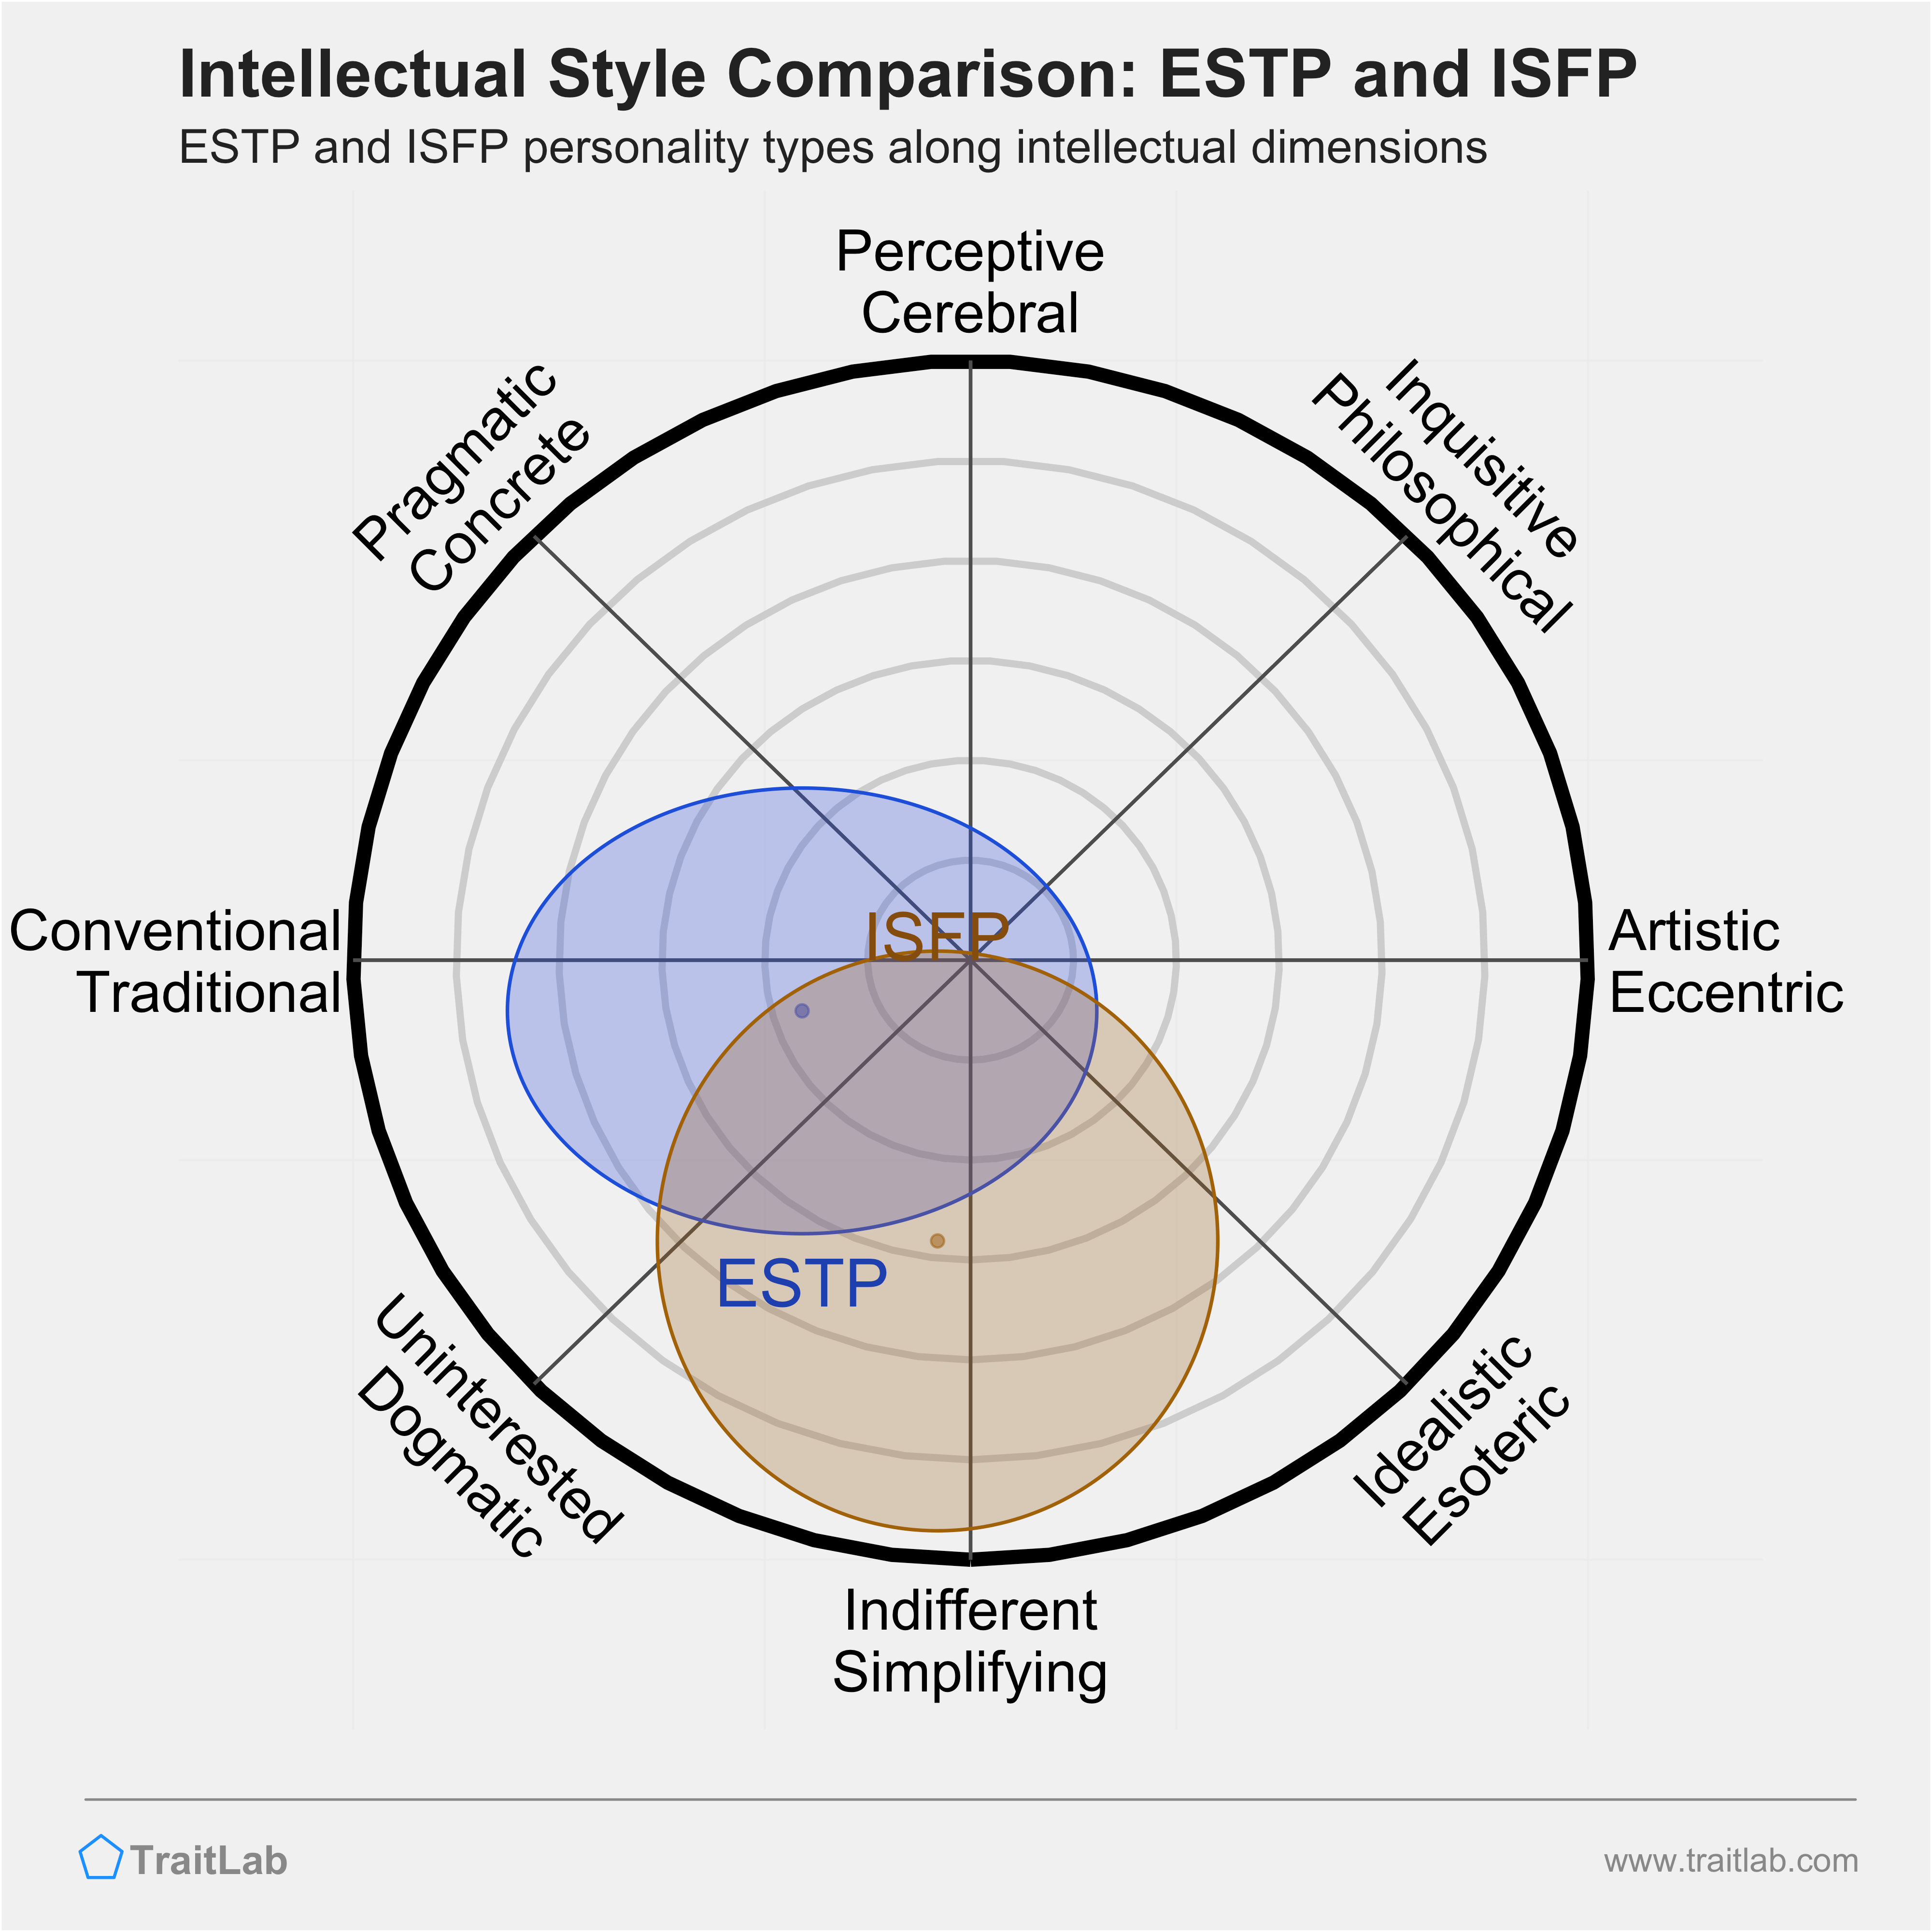 ESTP and ISFP comparison across intellectual dimensions